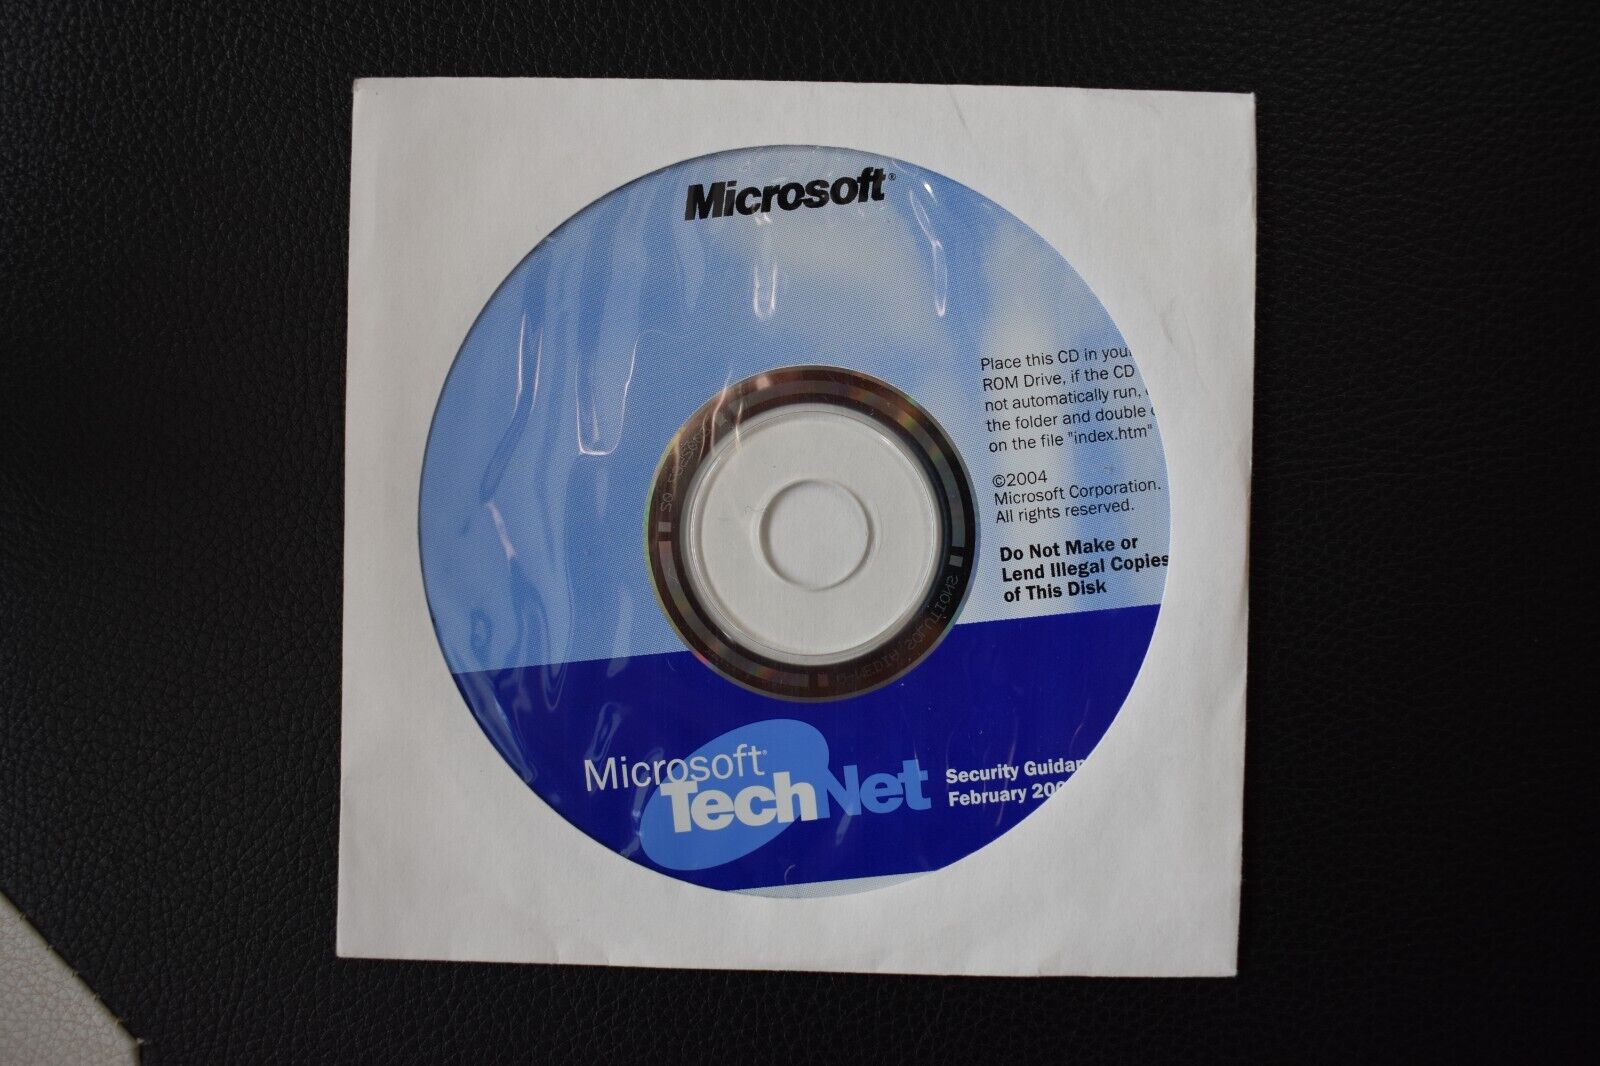 Microsoft TechNet CD - Security Guidance February 2004